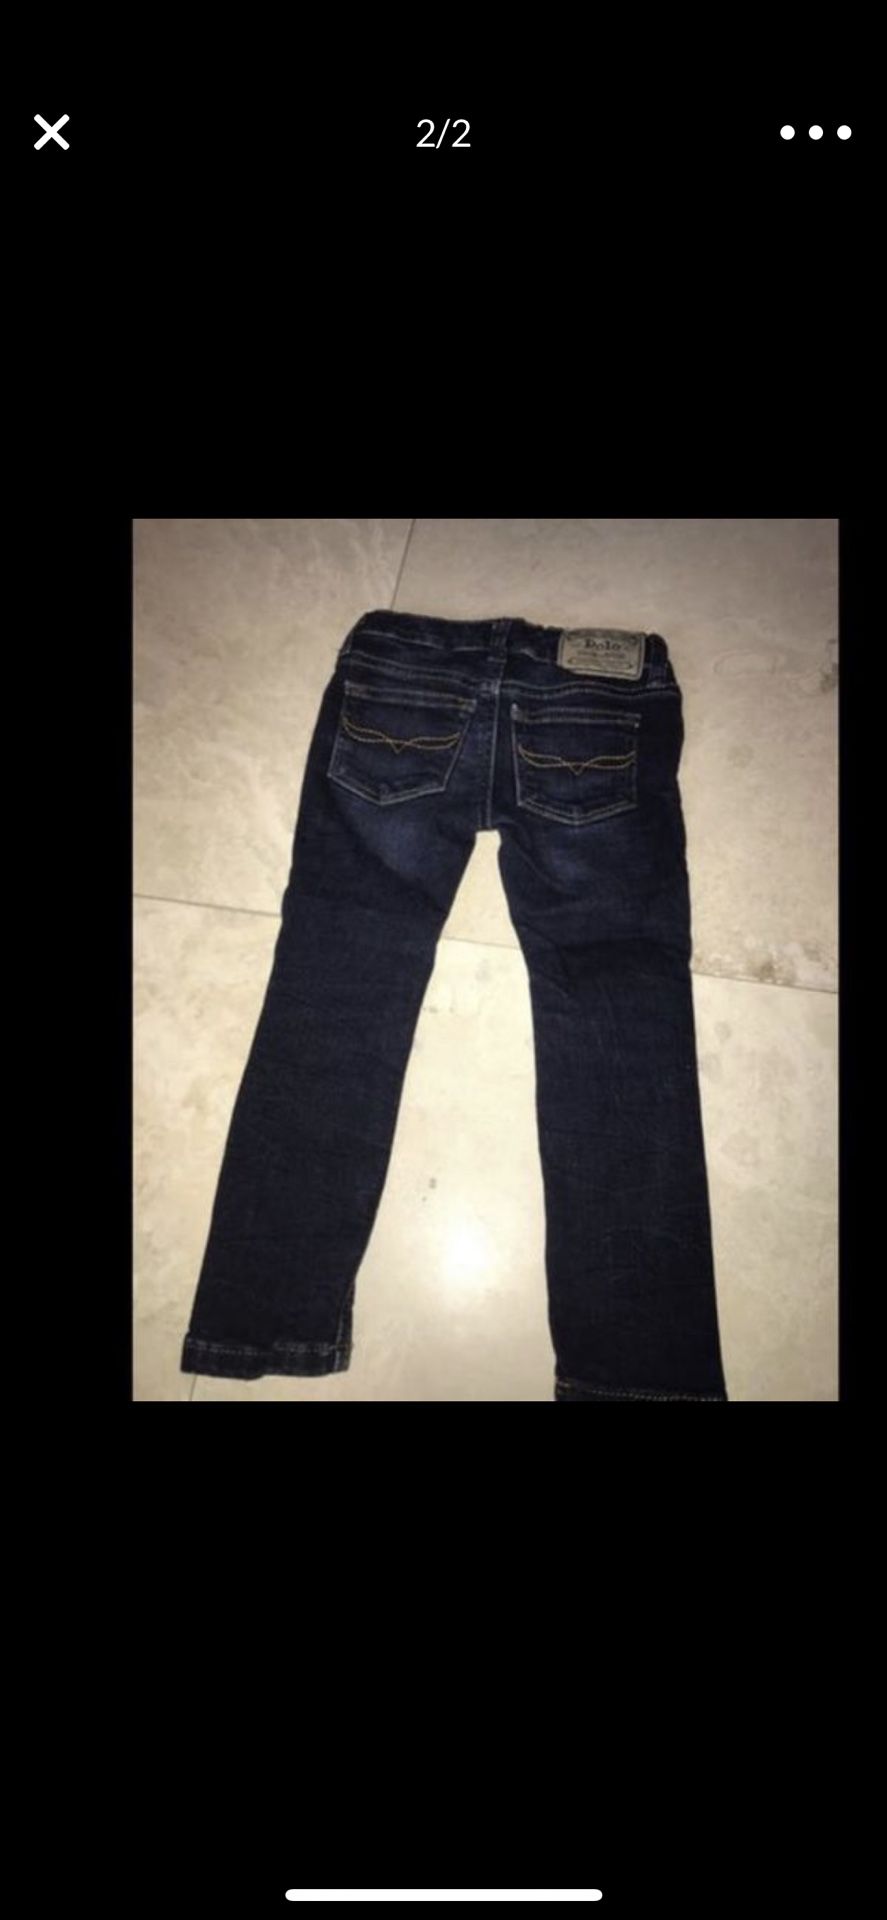 Ralph Lauren kid Girls jeans size 2T like new